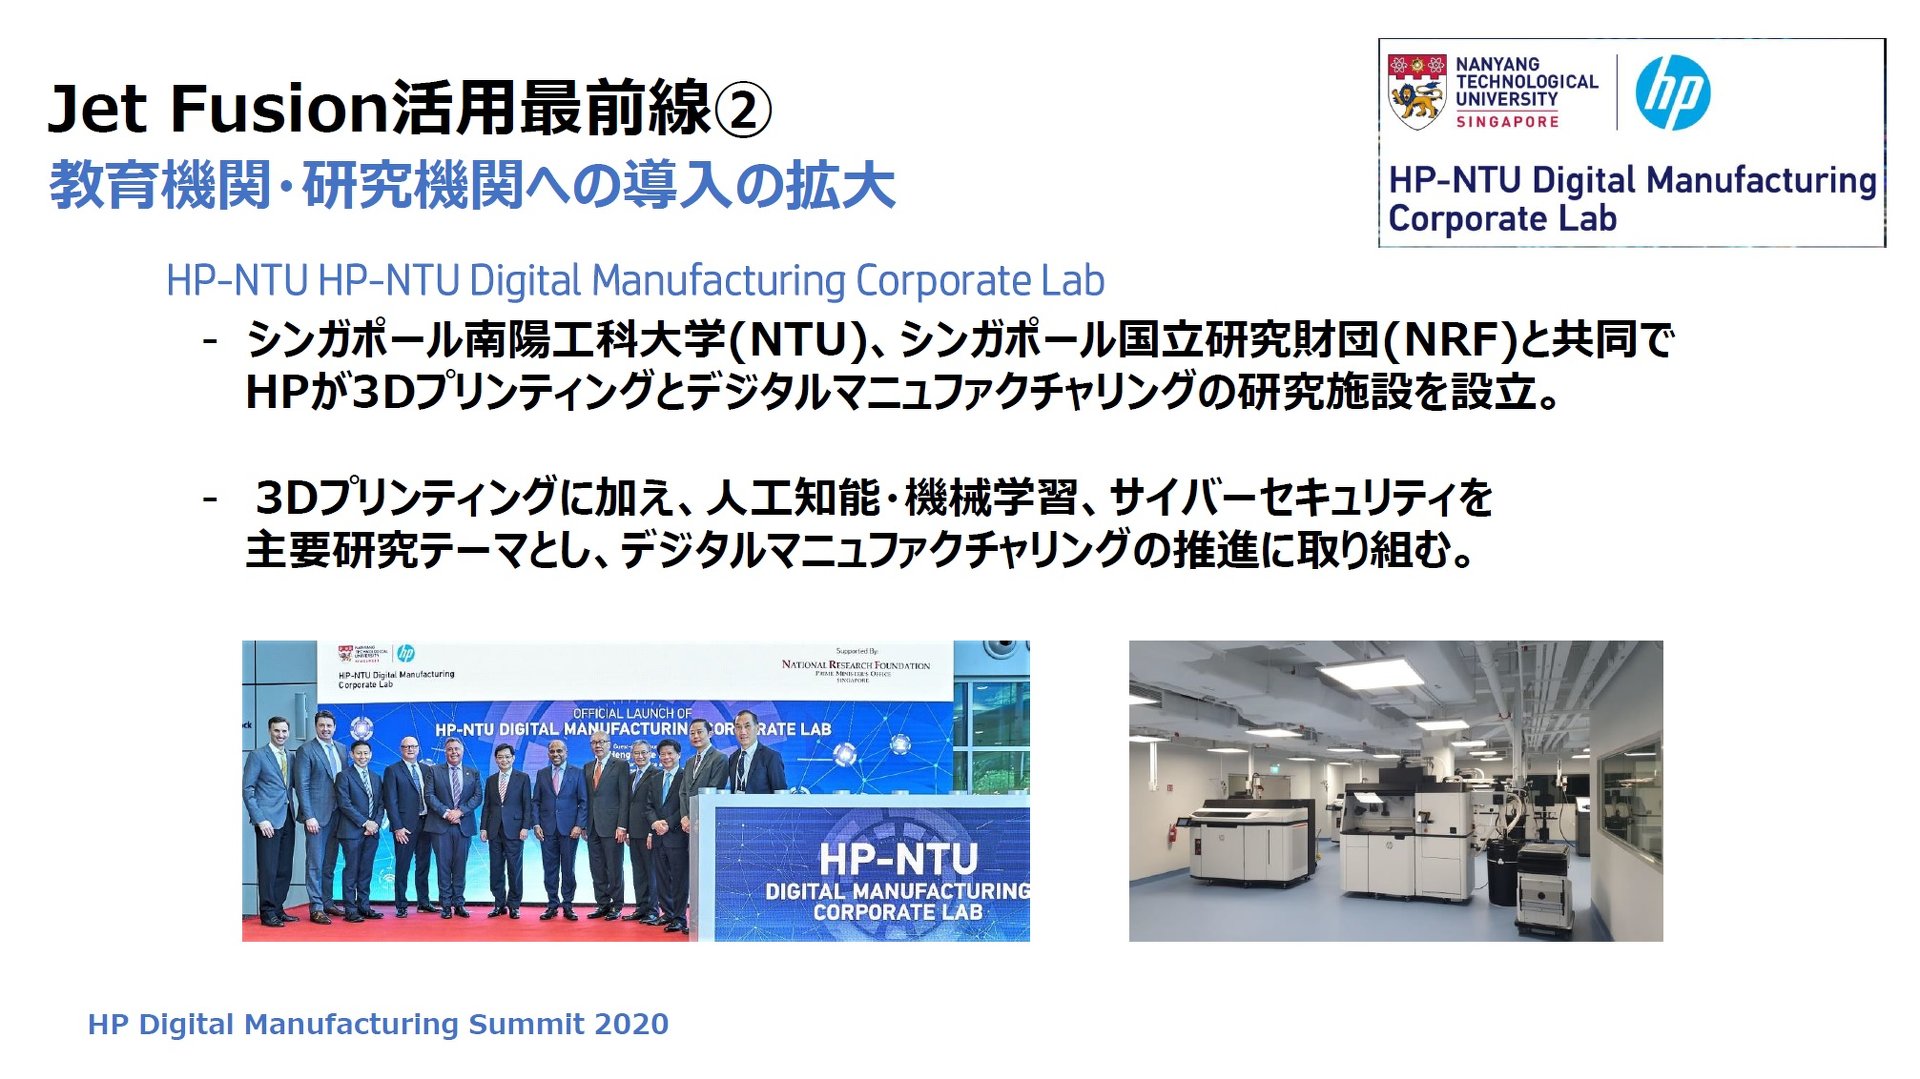 uHP-NTU Digital Manufacturing Corporate Labvɂ oTFHP mNbNŊgn